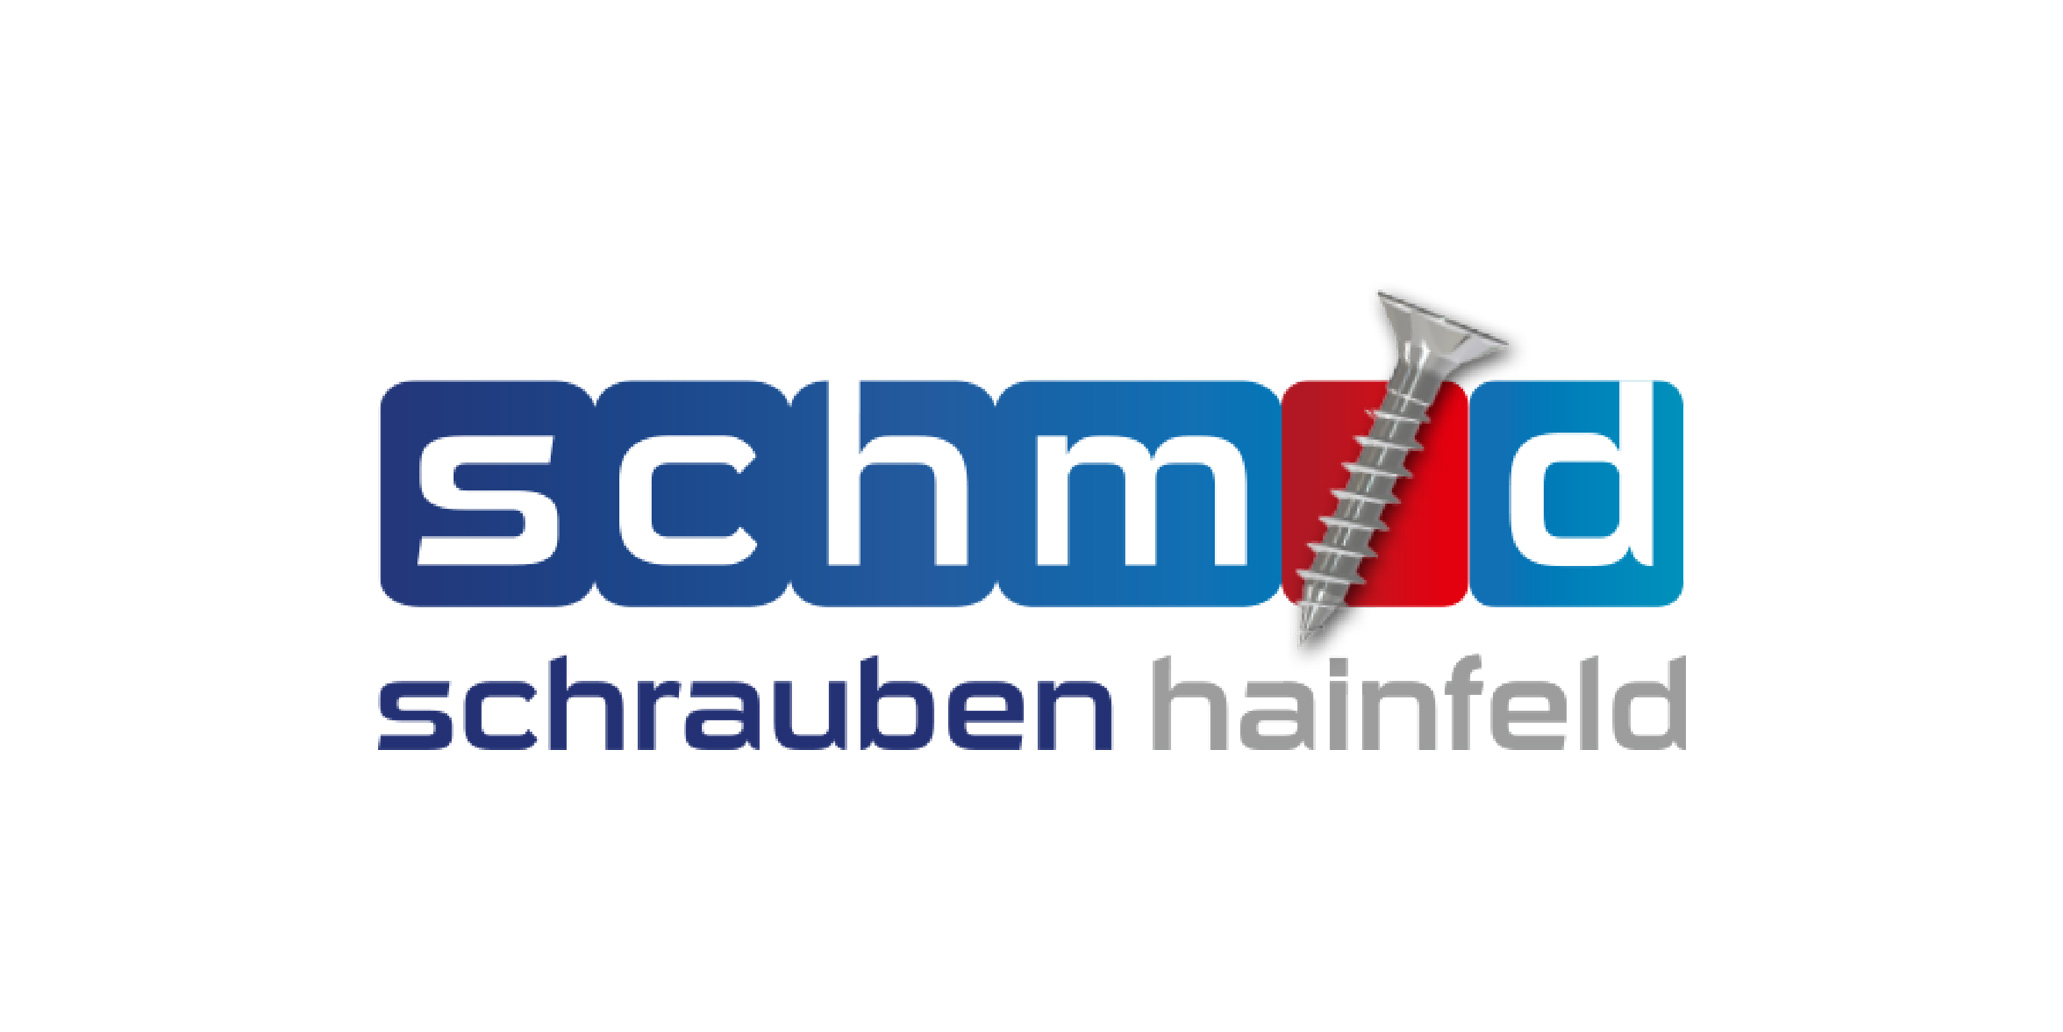 Schmid Schrauben